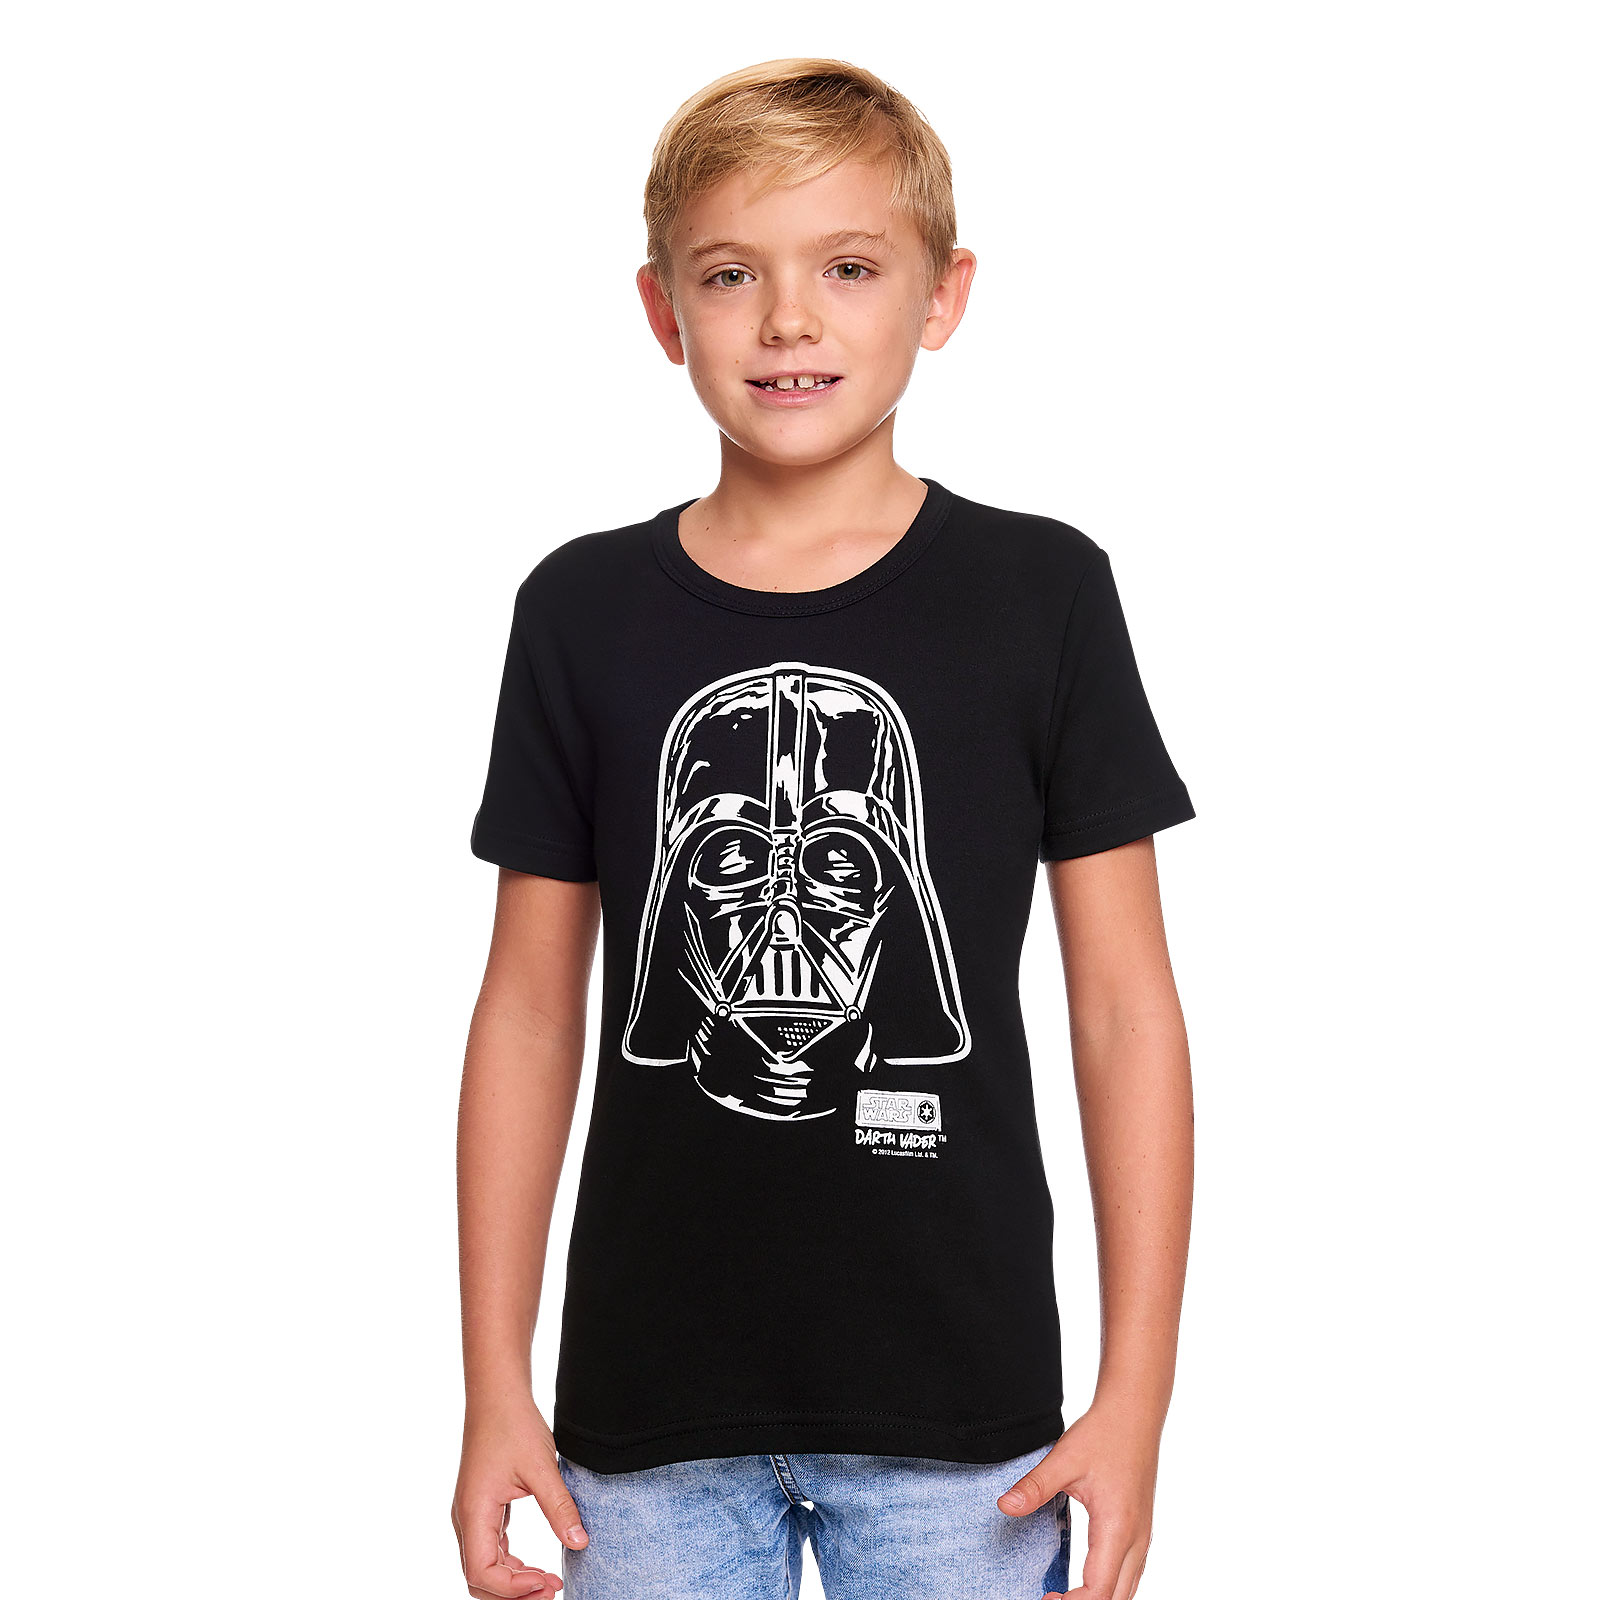 Star Wars - Darth Vader Portret Kindershirt